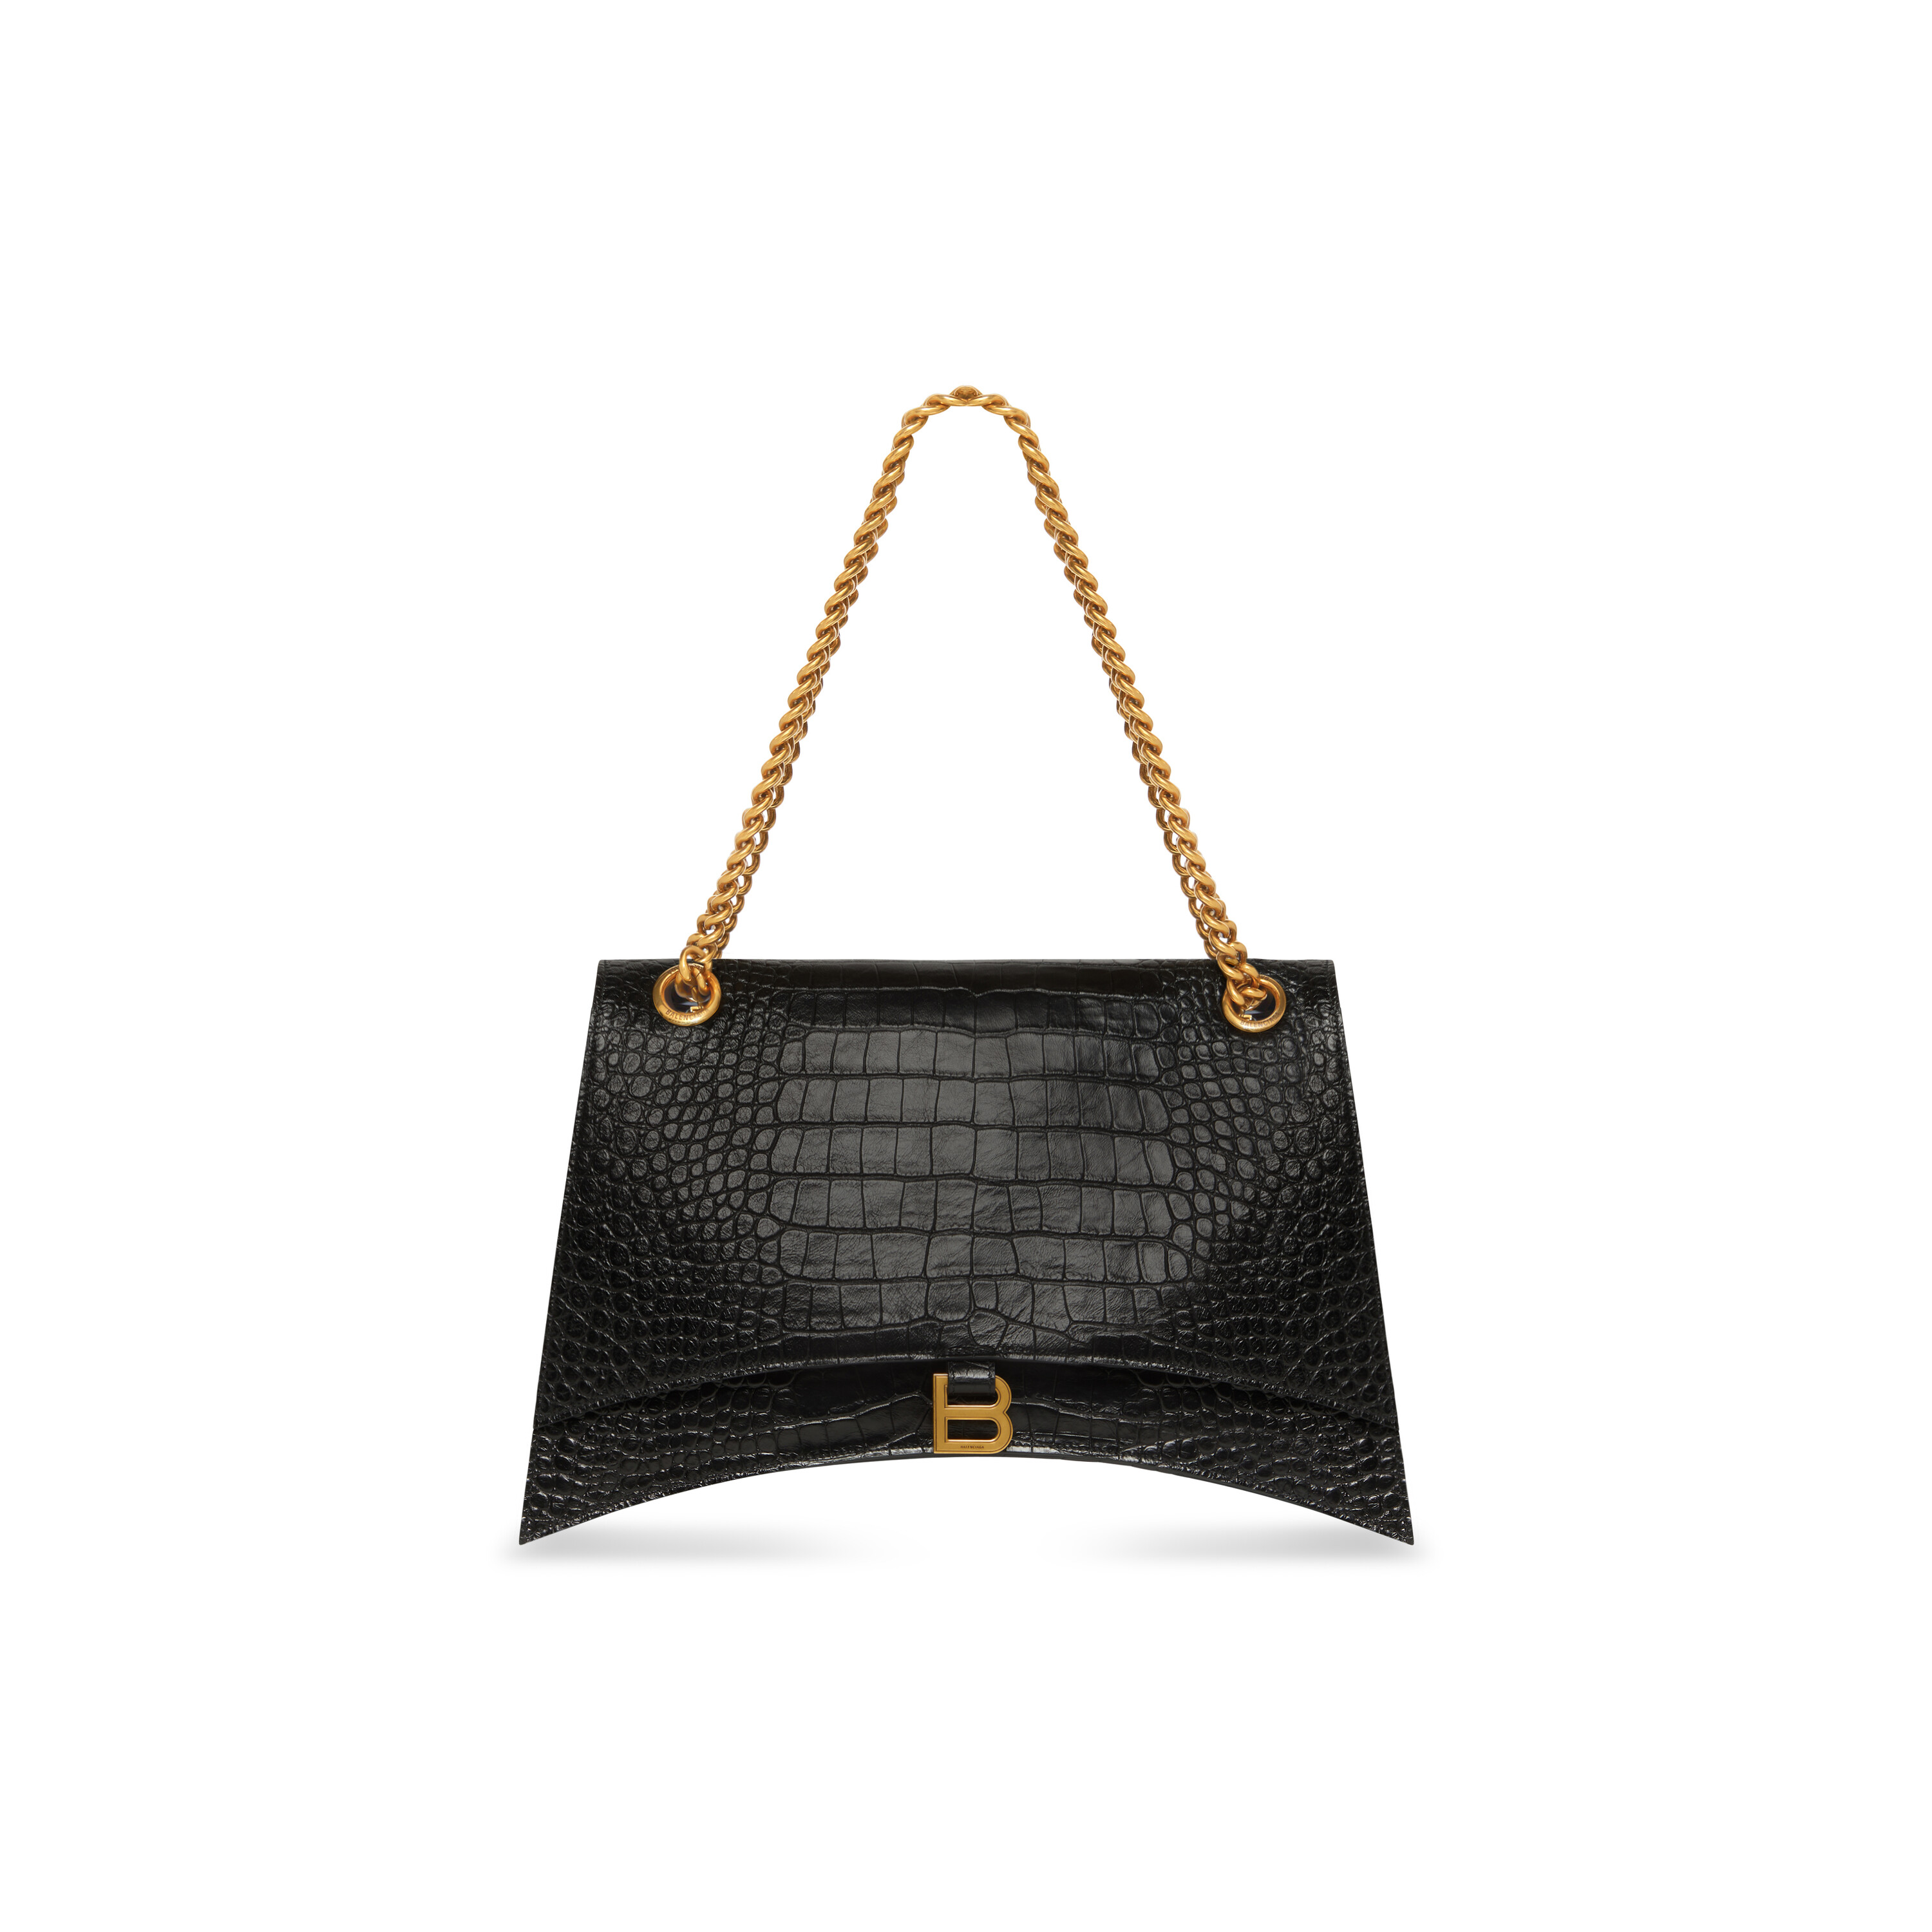 Vimoda BAG3377 Small Croc Leather Chain Bag In Black